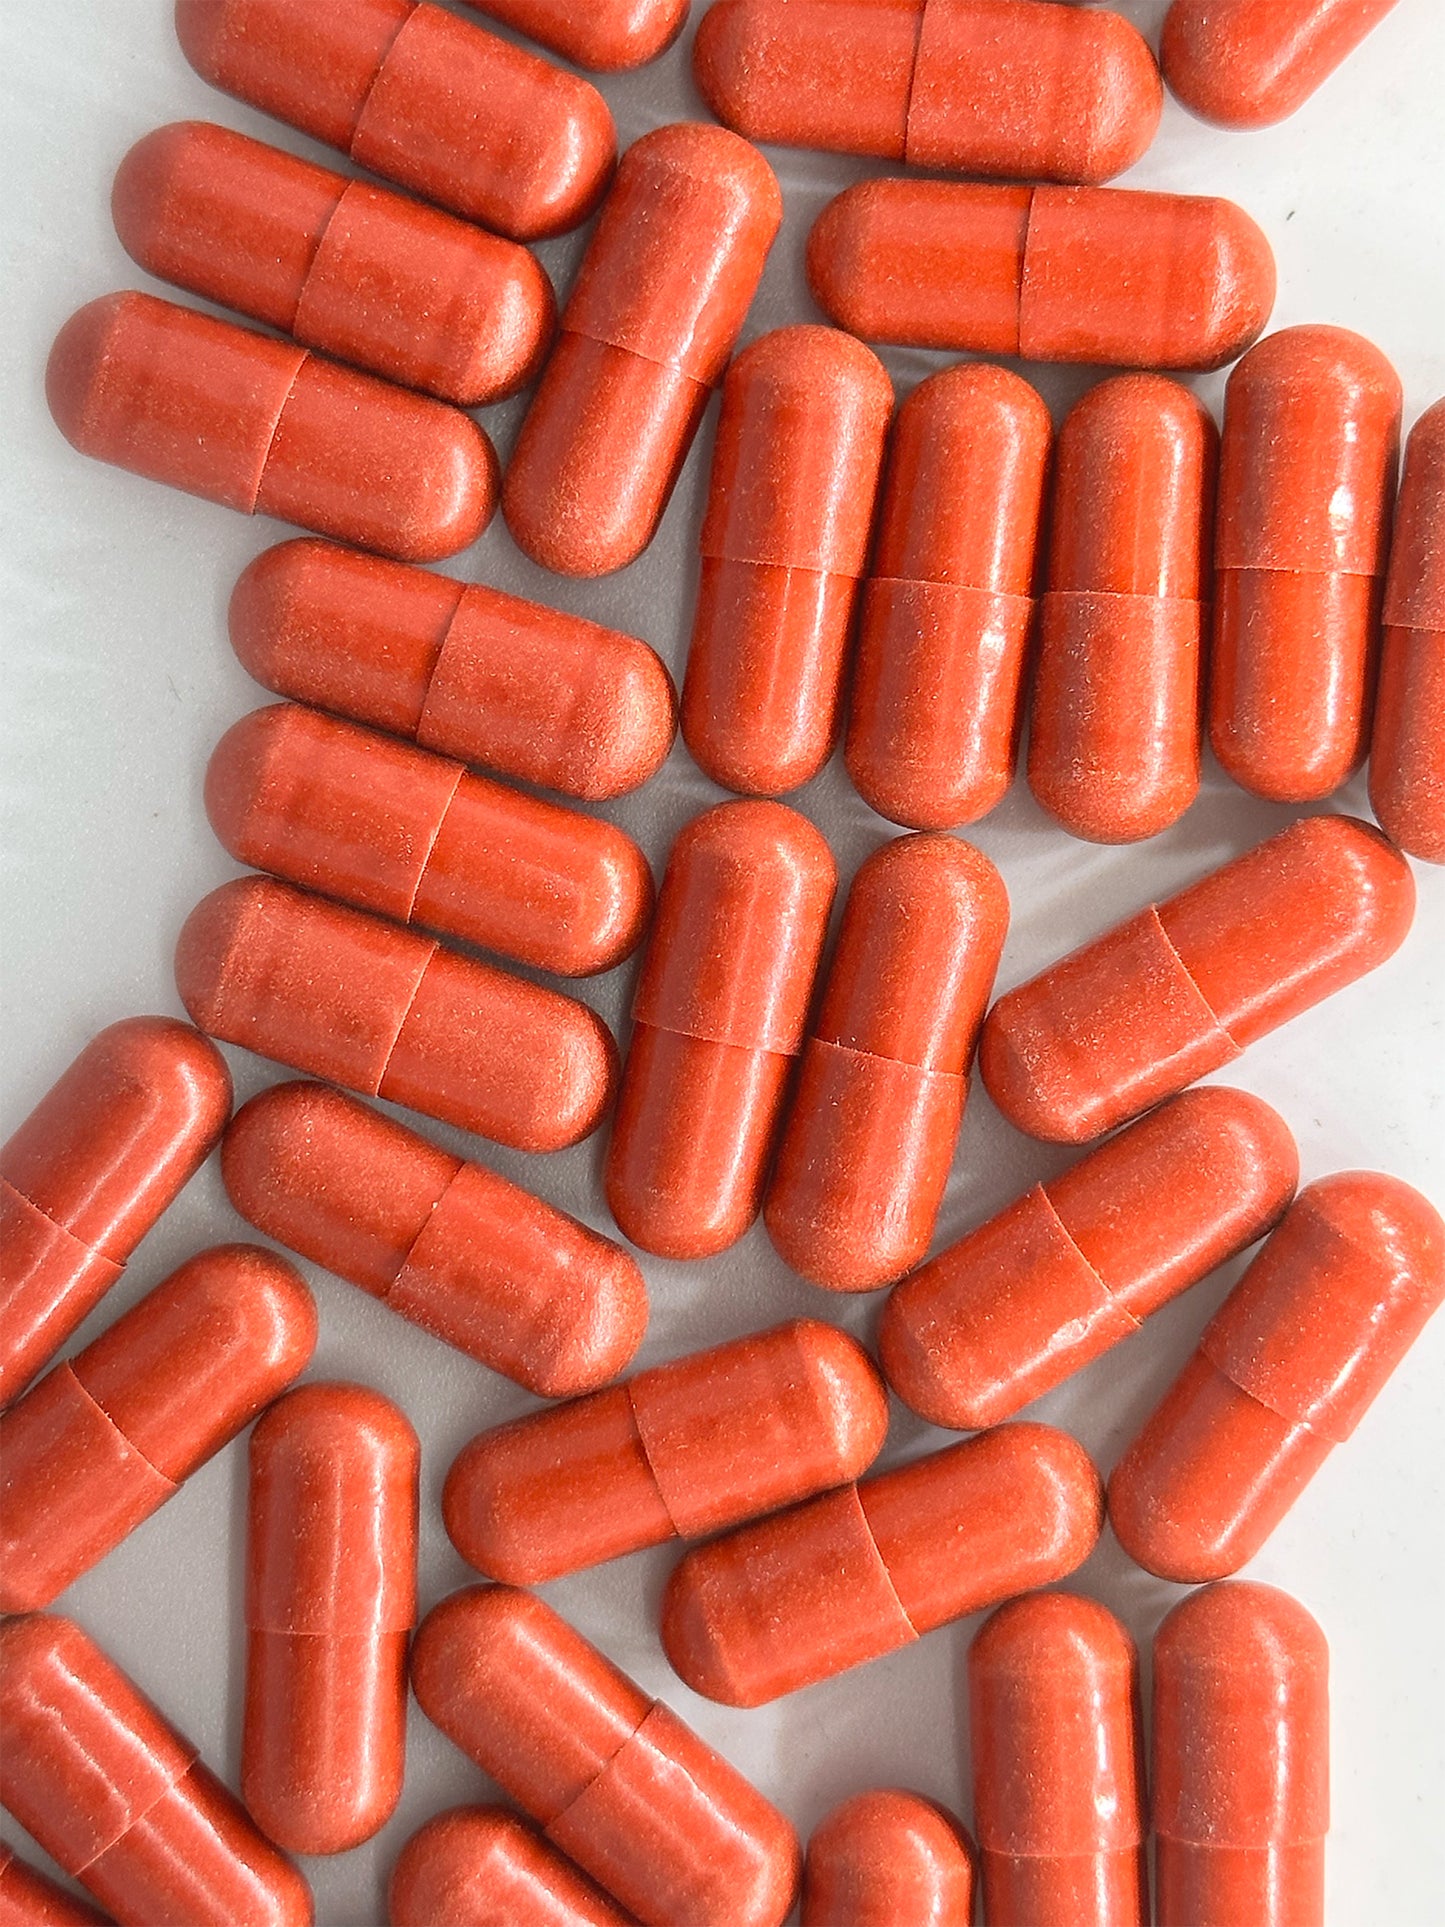 Multi Vitamin capsules for Women